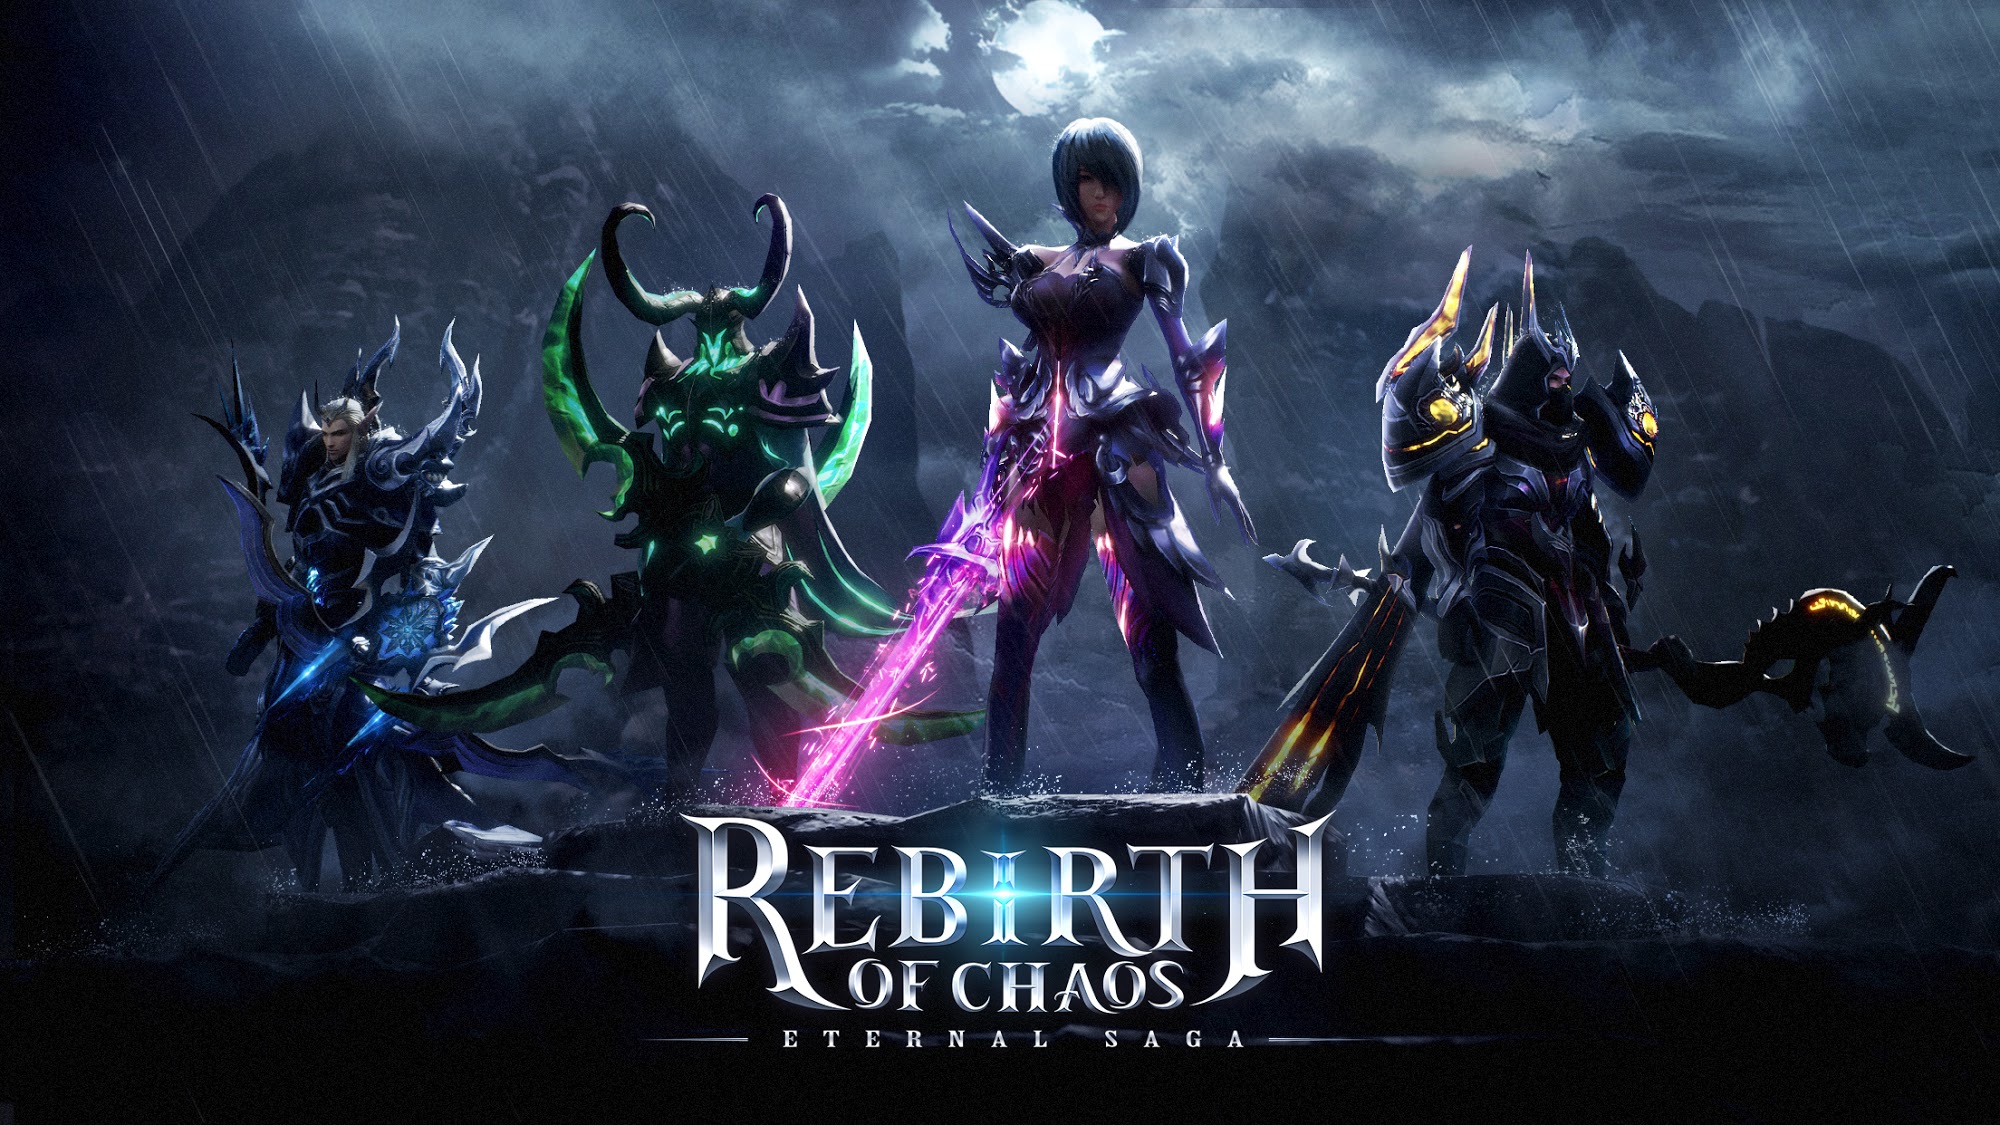 Télécharger Rebirth of Chaos: Eternal saga pour Android gratuit.